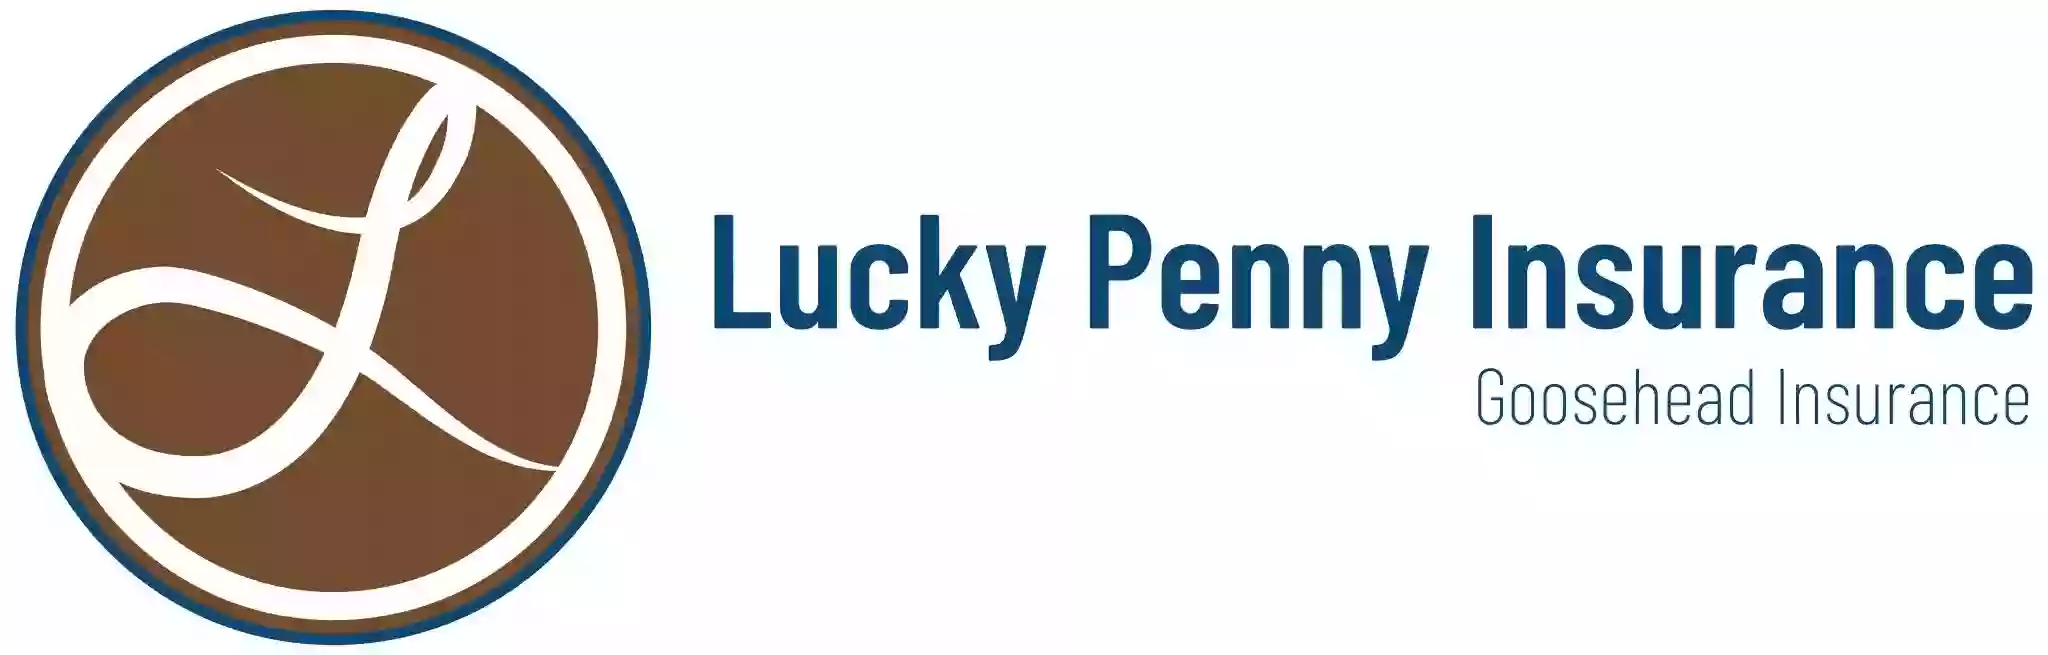 Lucky Penny Insurance - Goosehead Insurance